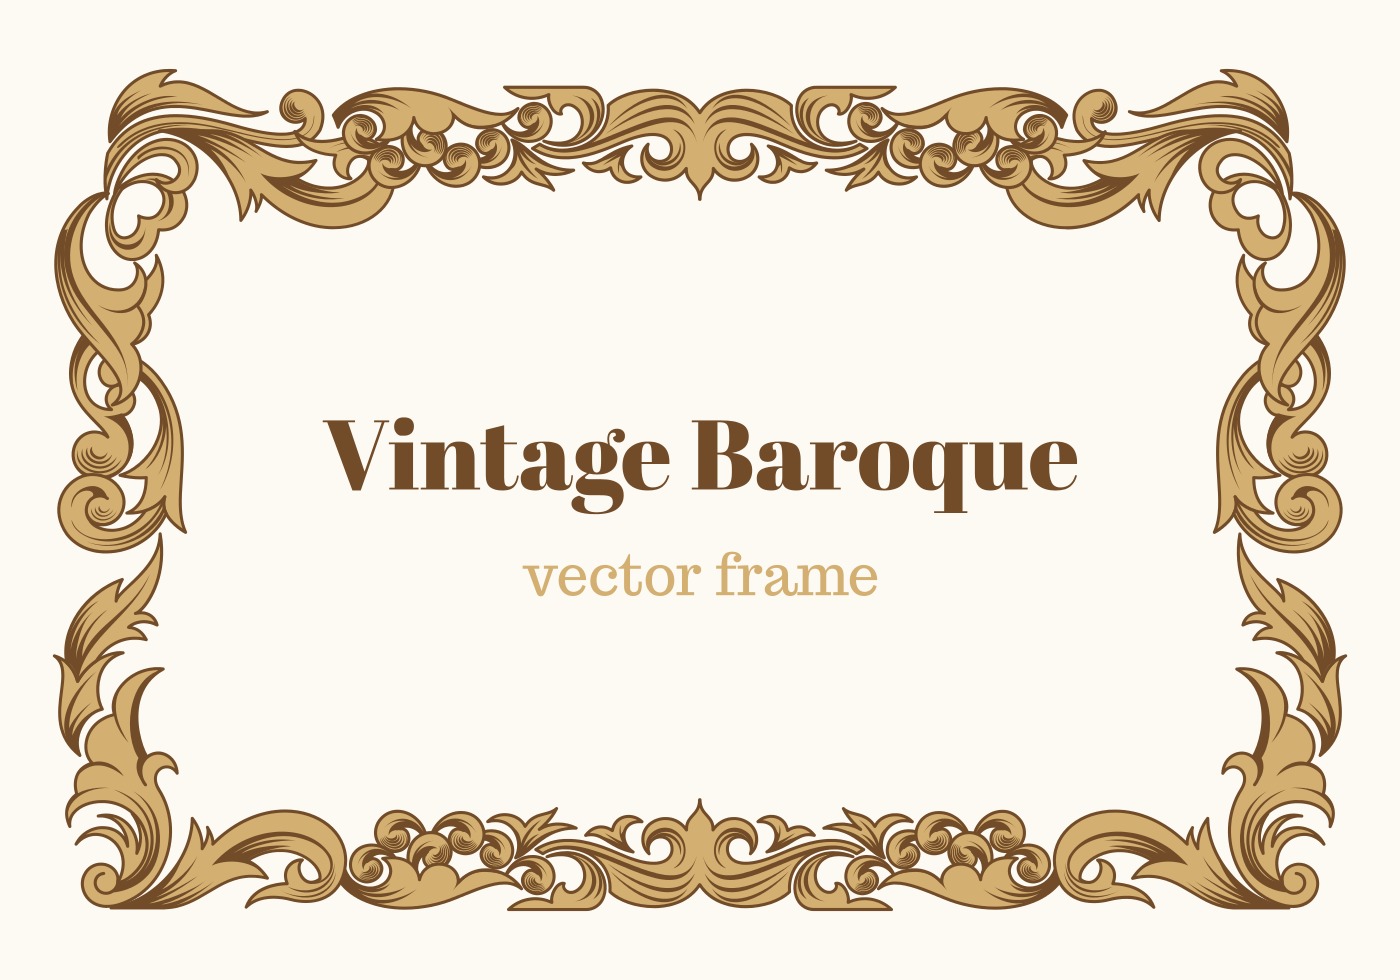 Vintage Baroque Vector Frame 129016 Vector Art at Vecteezy